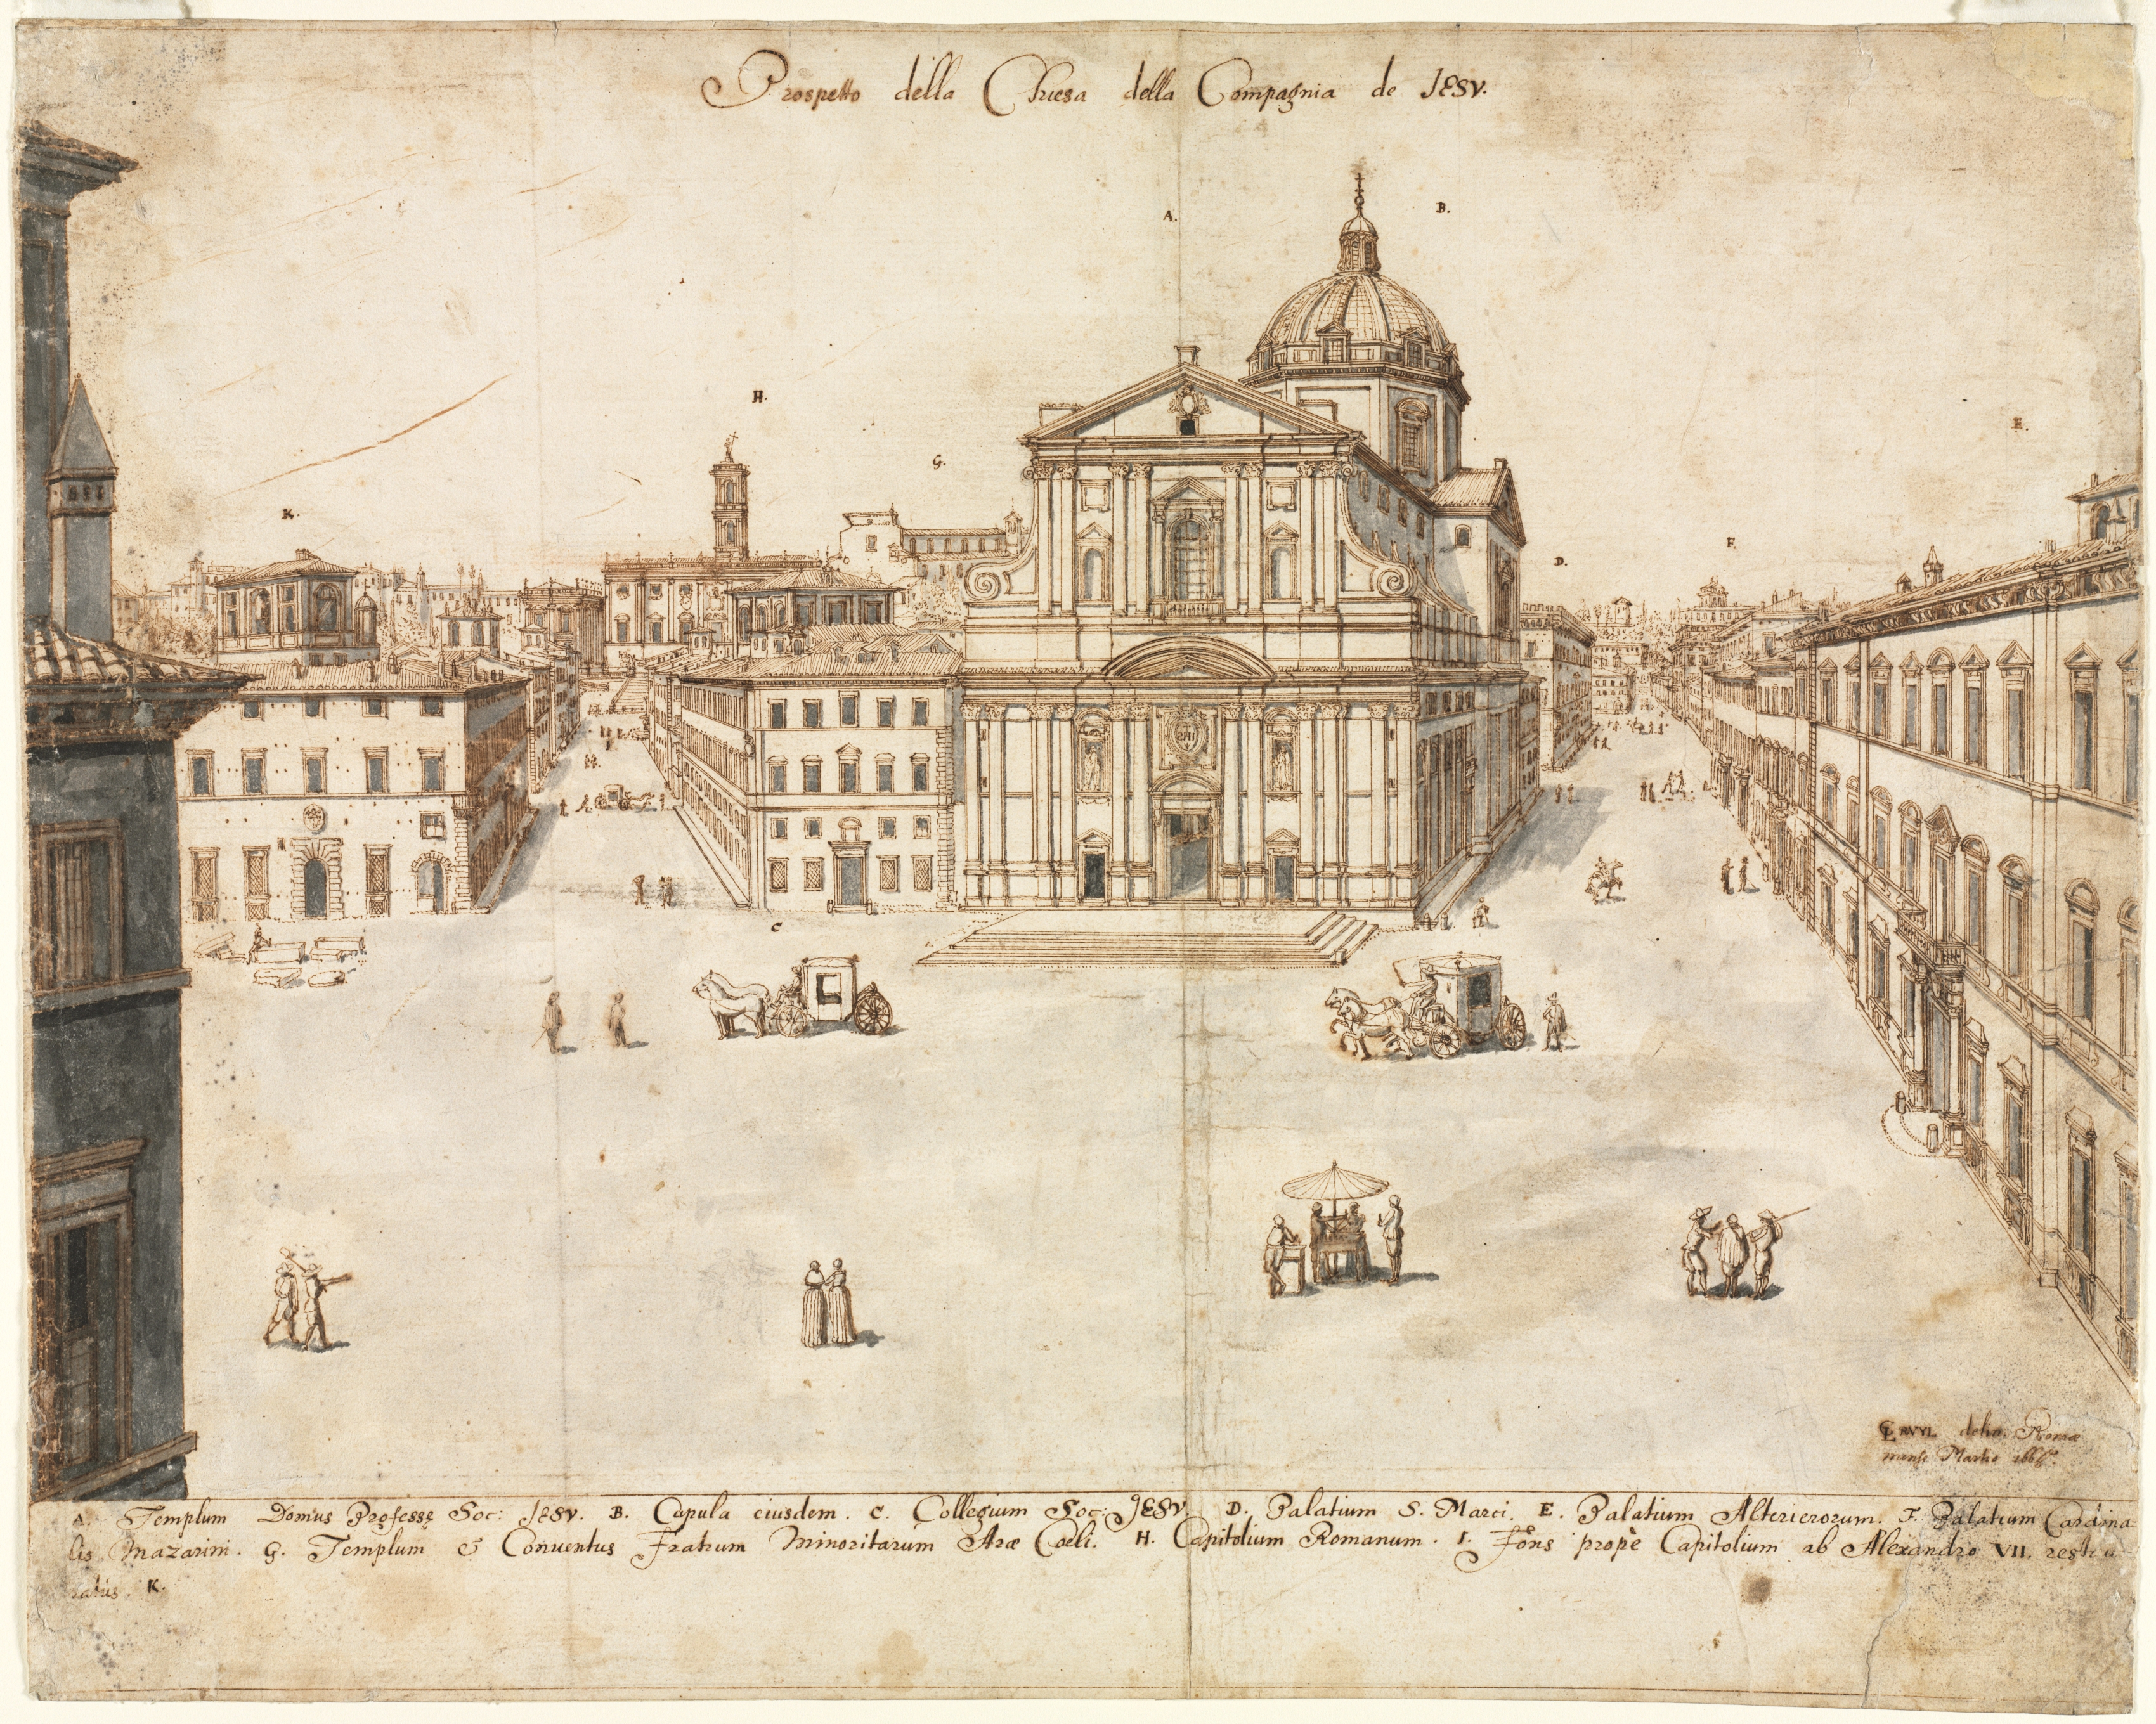 Eighteen Views of Rome: The Church of the Gesù